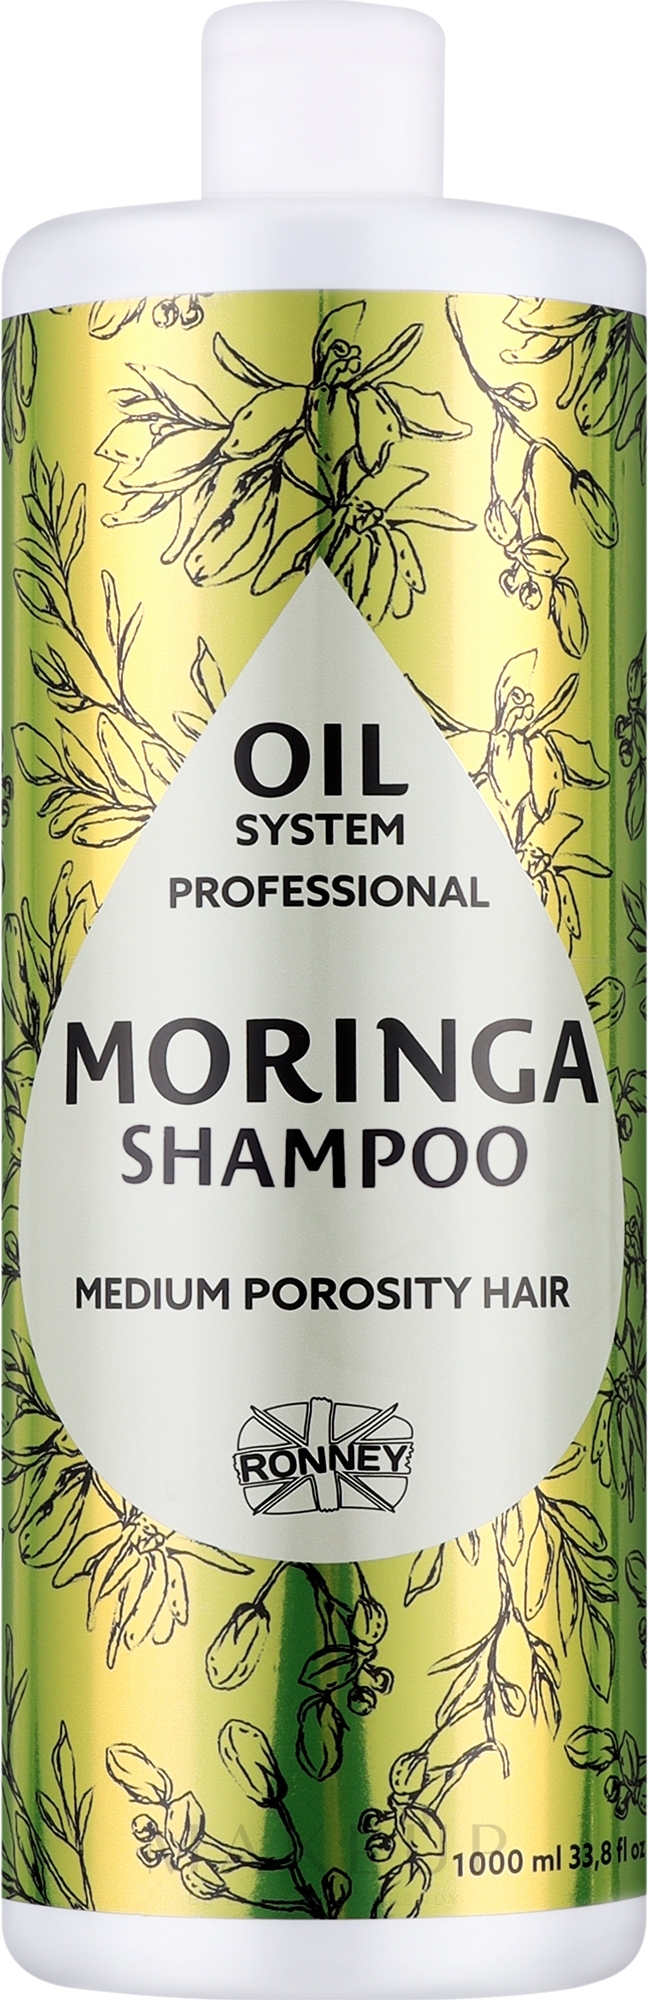 Shampoo für mittelporöses Haar mit Moringaöl - Ronney Professional Oil System Medium Porosity Hair Moringa Shampoo — Bild 1000 ml